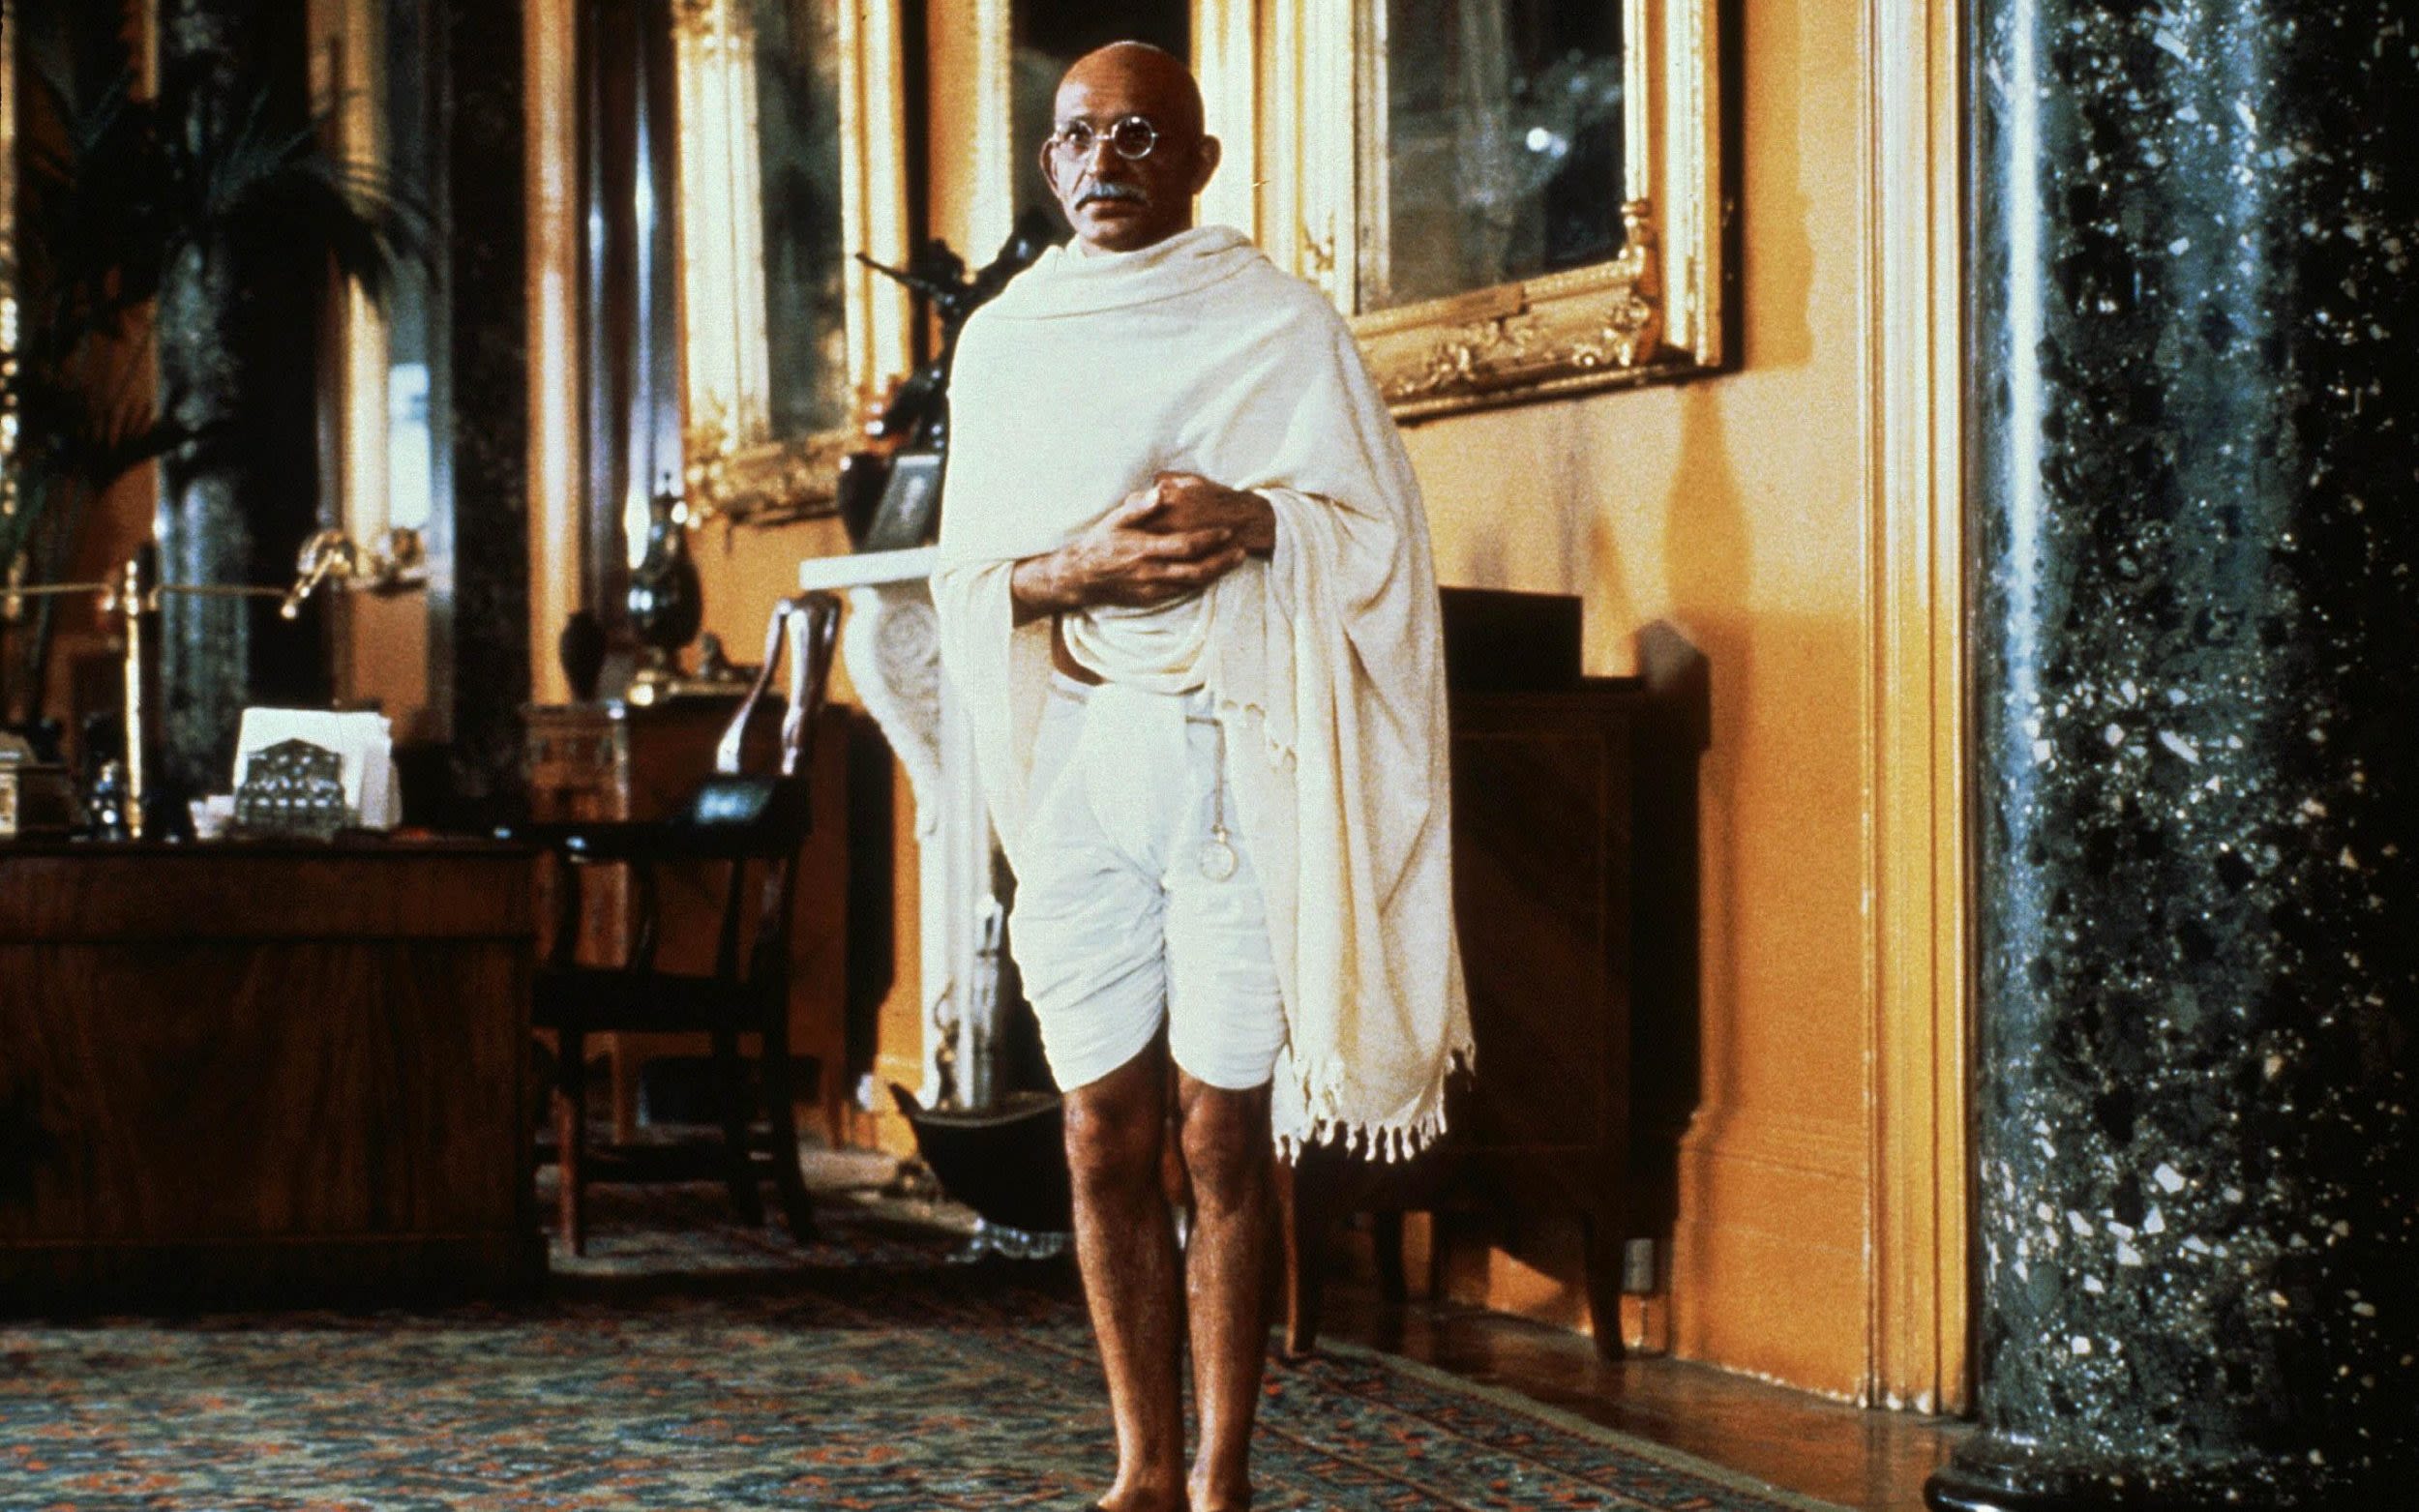 Nobody knew Gandhi before Oscar-winning biopic, says Narendra Modi